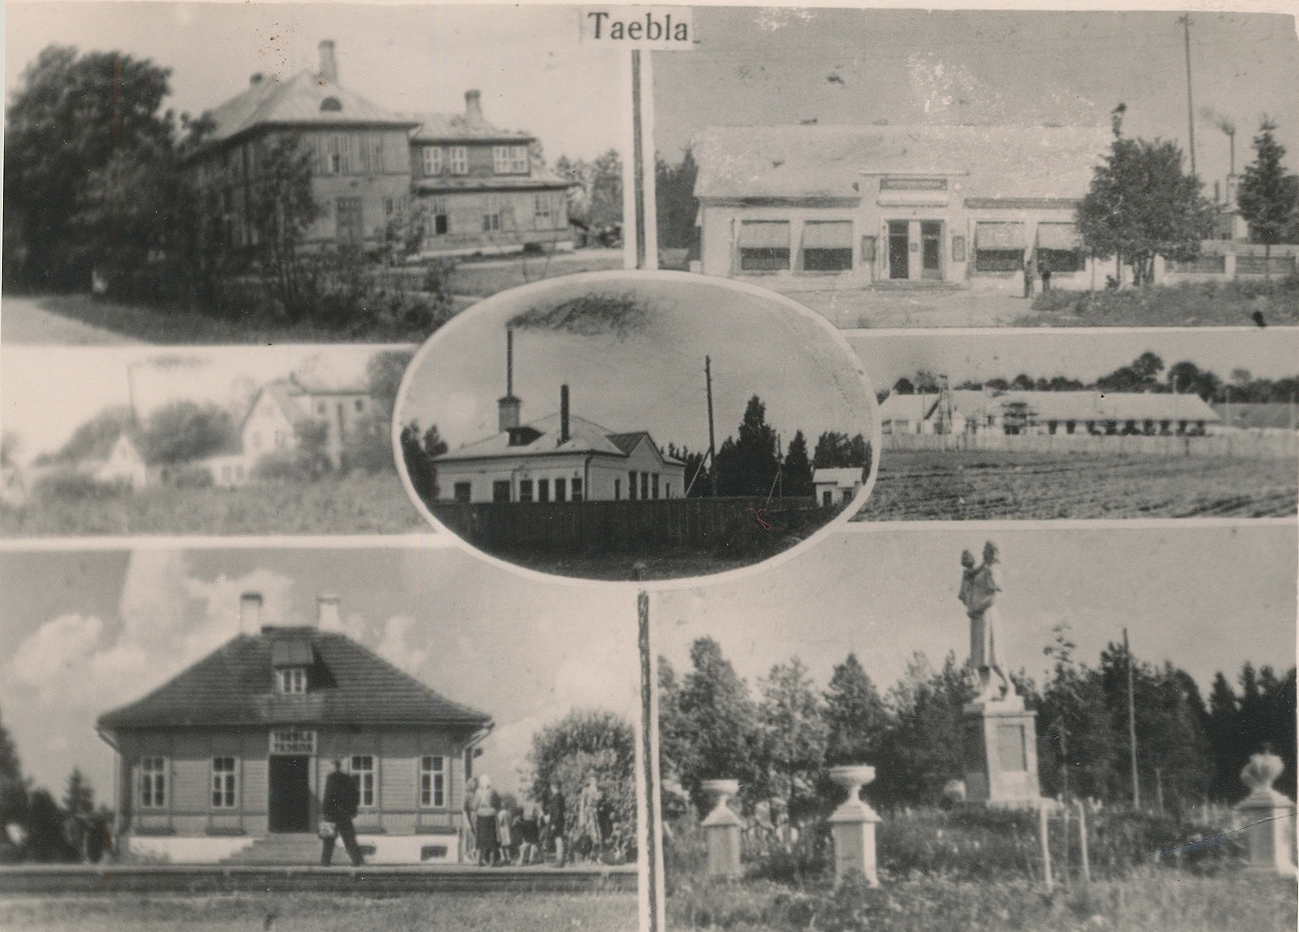 Taebla Photos Set